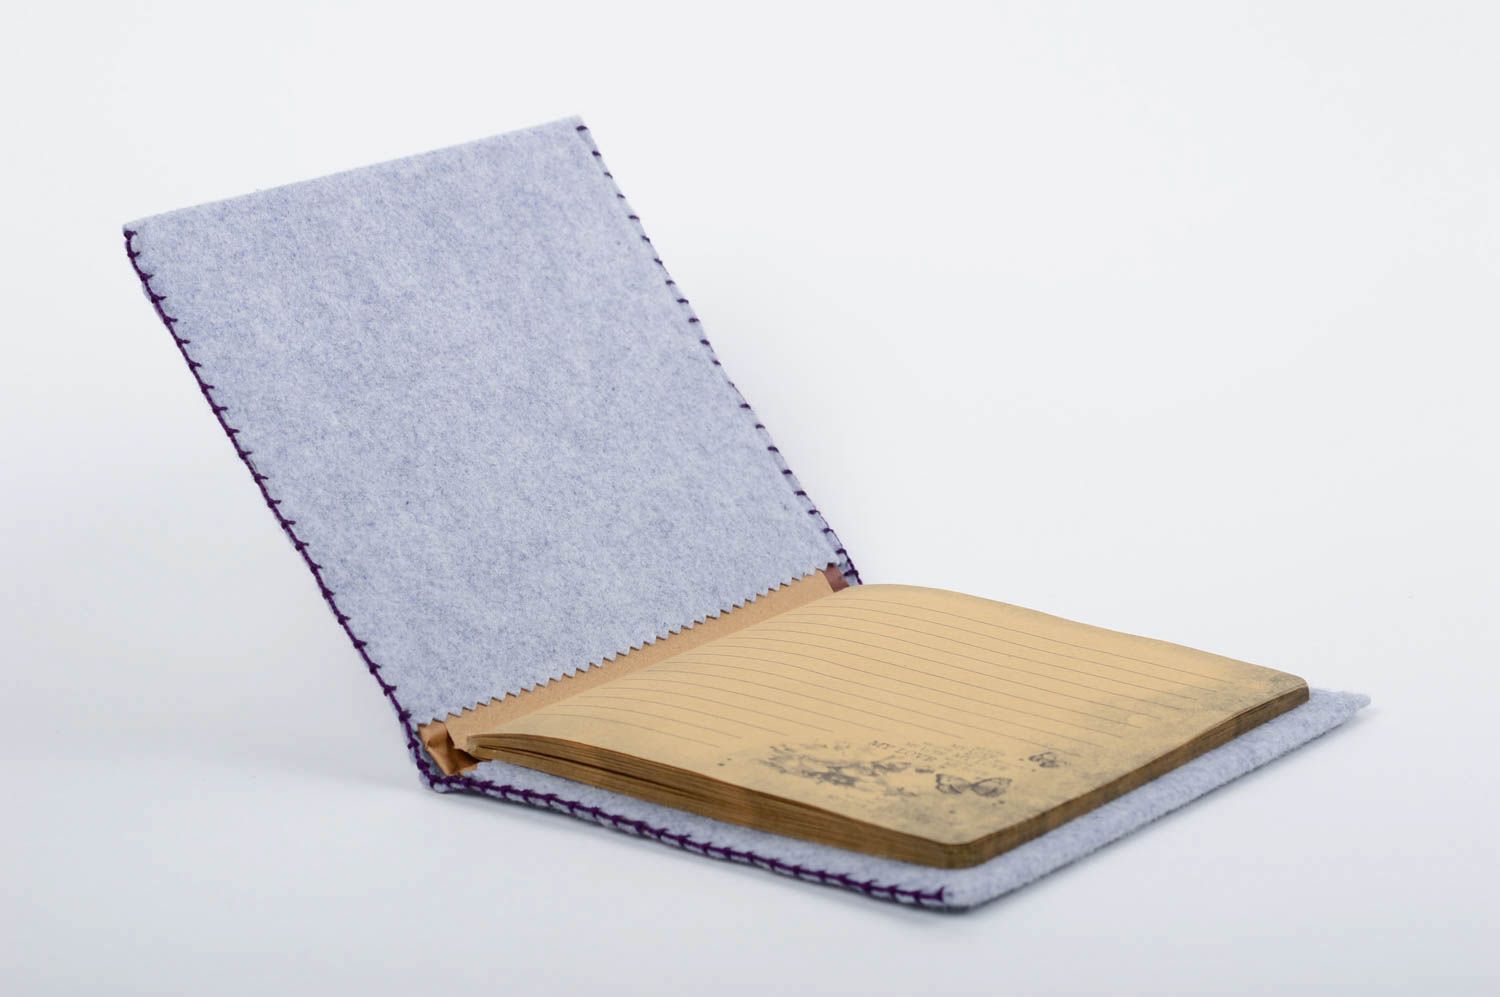 Handmade unique fleece notepad designer sketchbook  ideas for decor and present photo 2